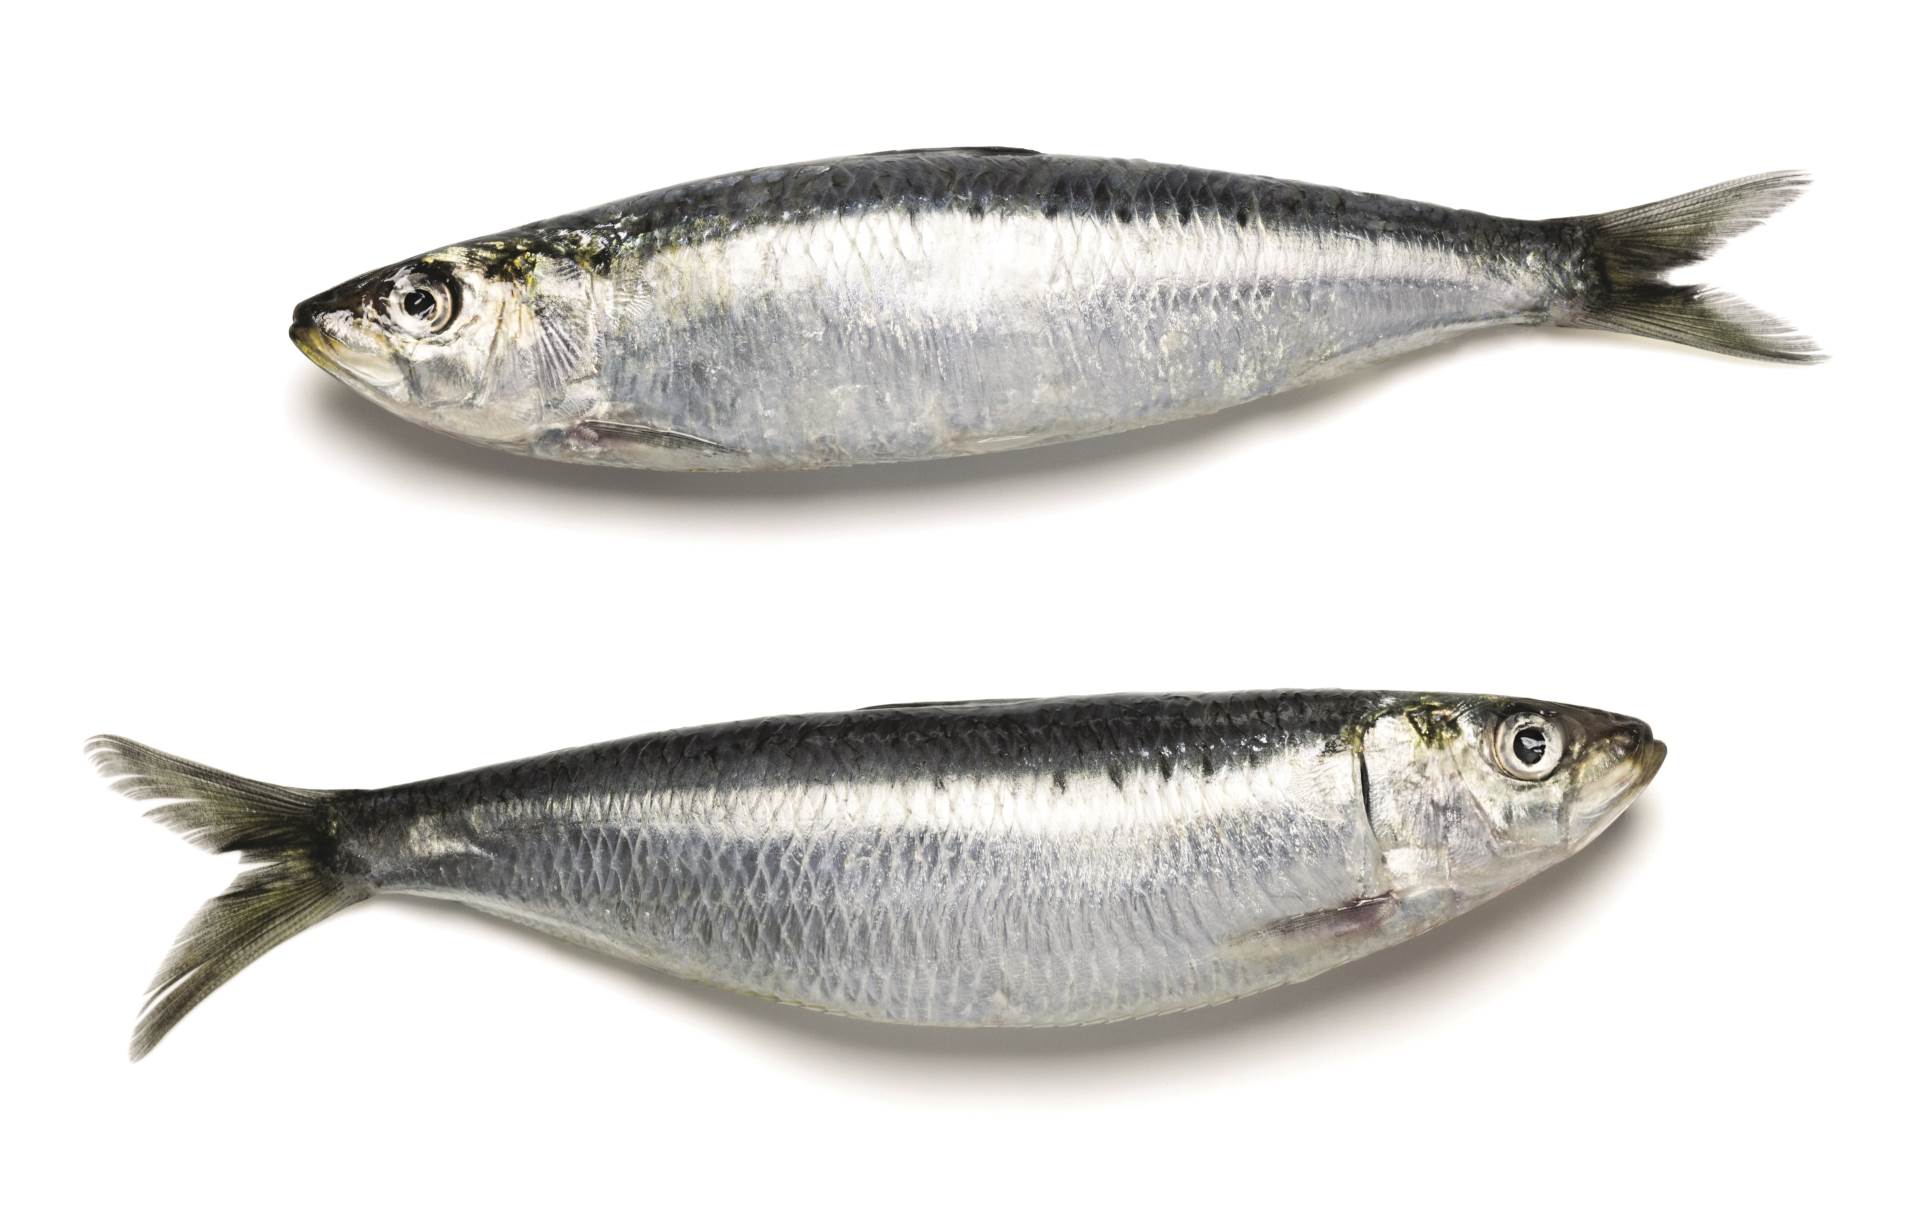 stock-photo-two-whole-sardines-on-white-background-265068365.jpg